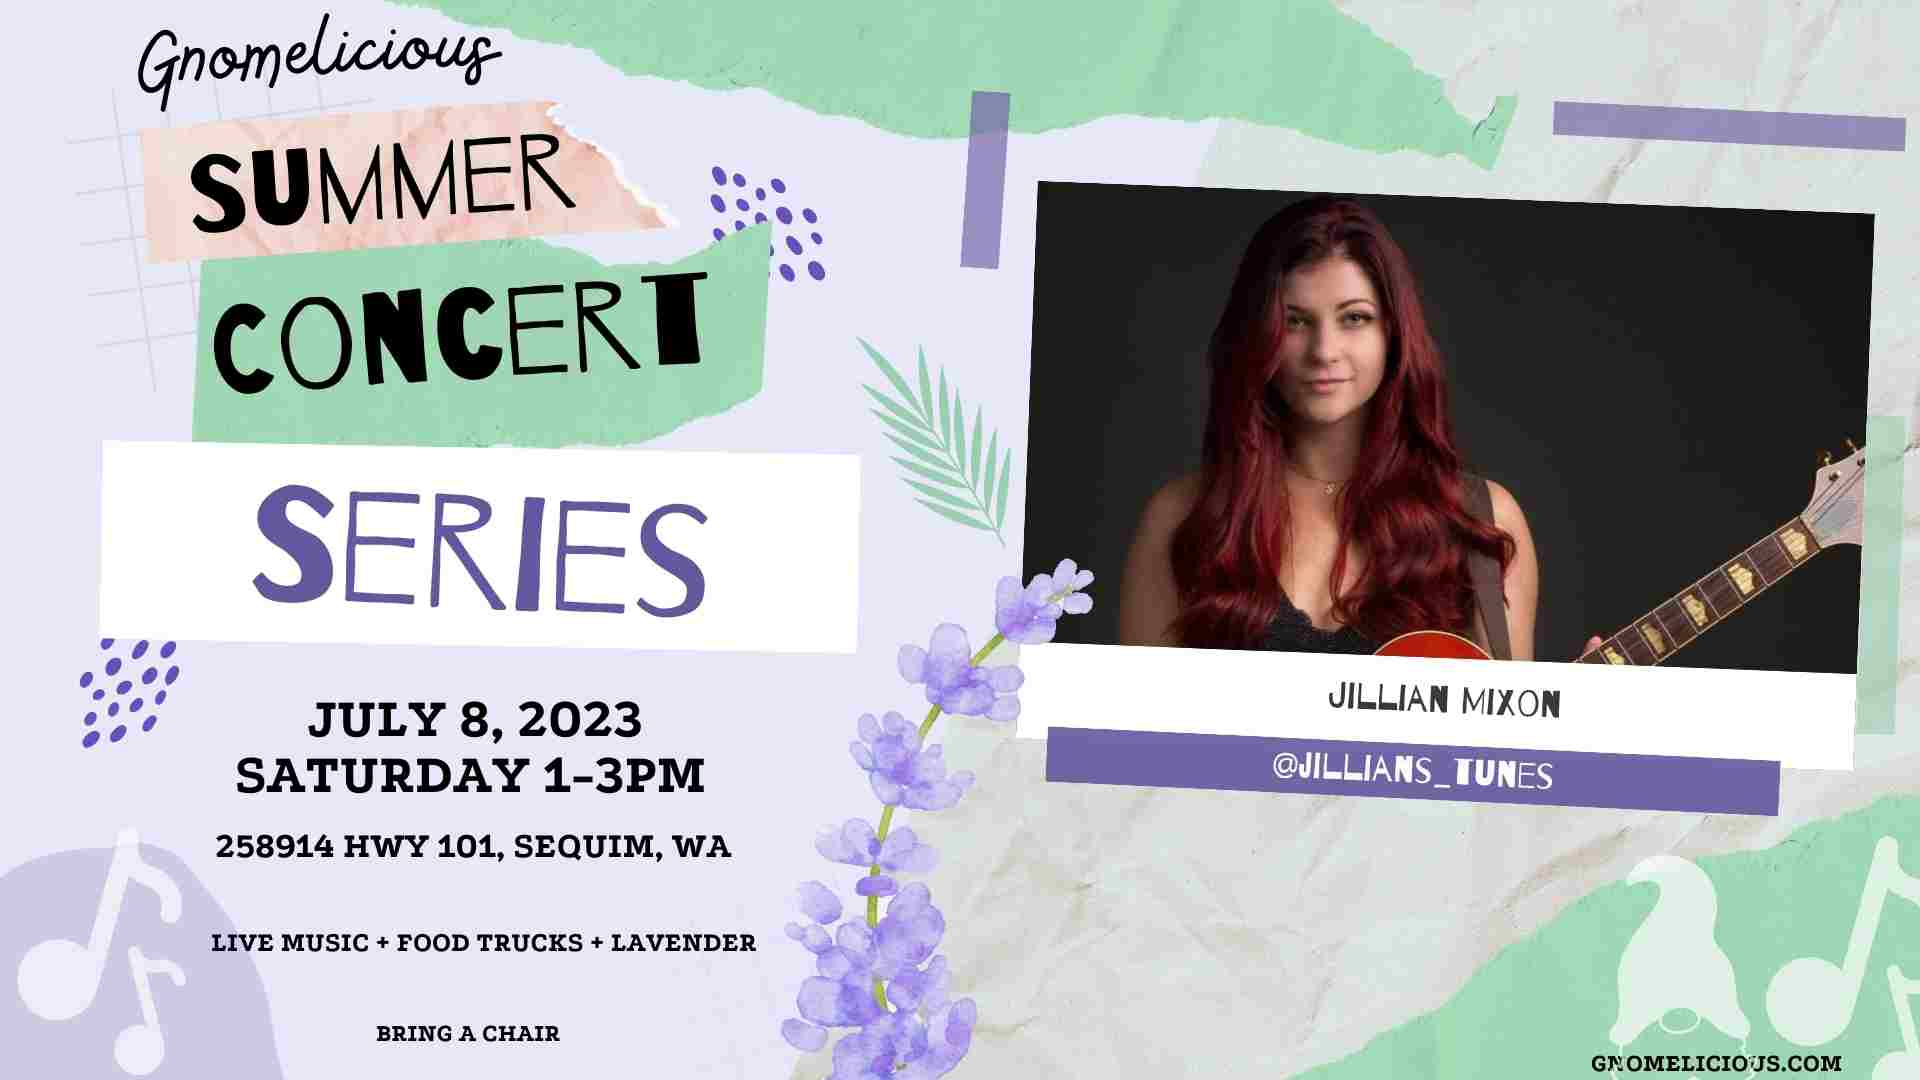 Gnomelicious Lavender Farm Summer Concert Series "Jillian Mixon"